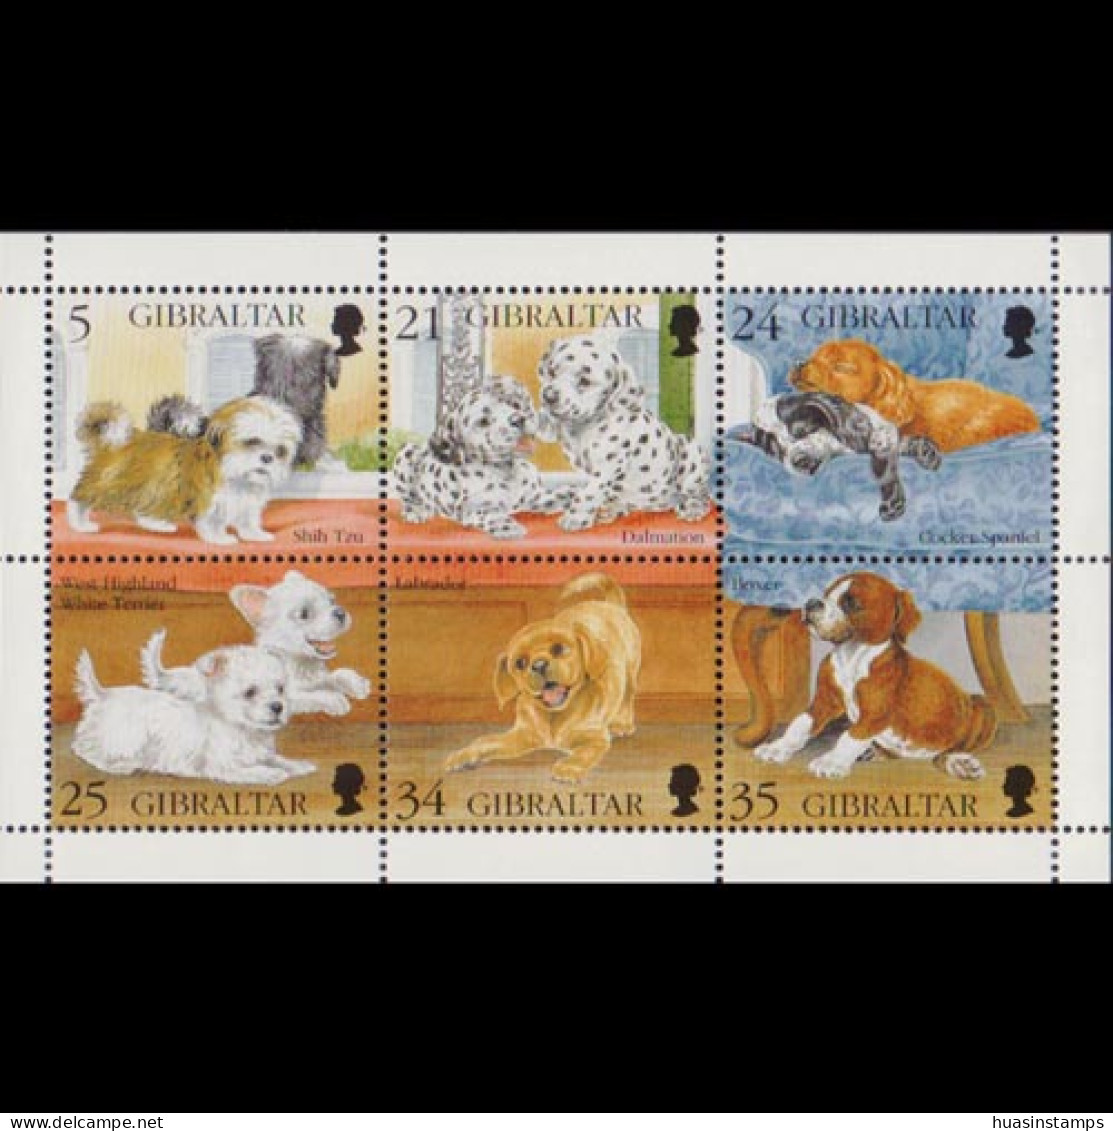 GIBRALTAR 1996 - Scott# 702 S/S Puppies MNH - Gibraltar